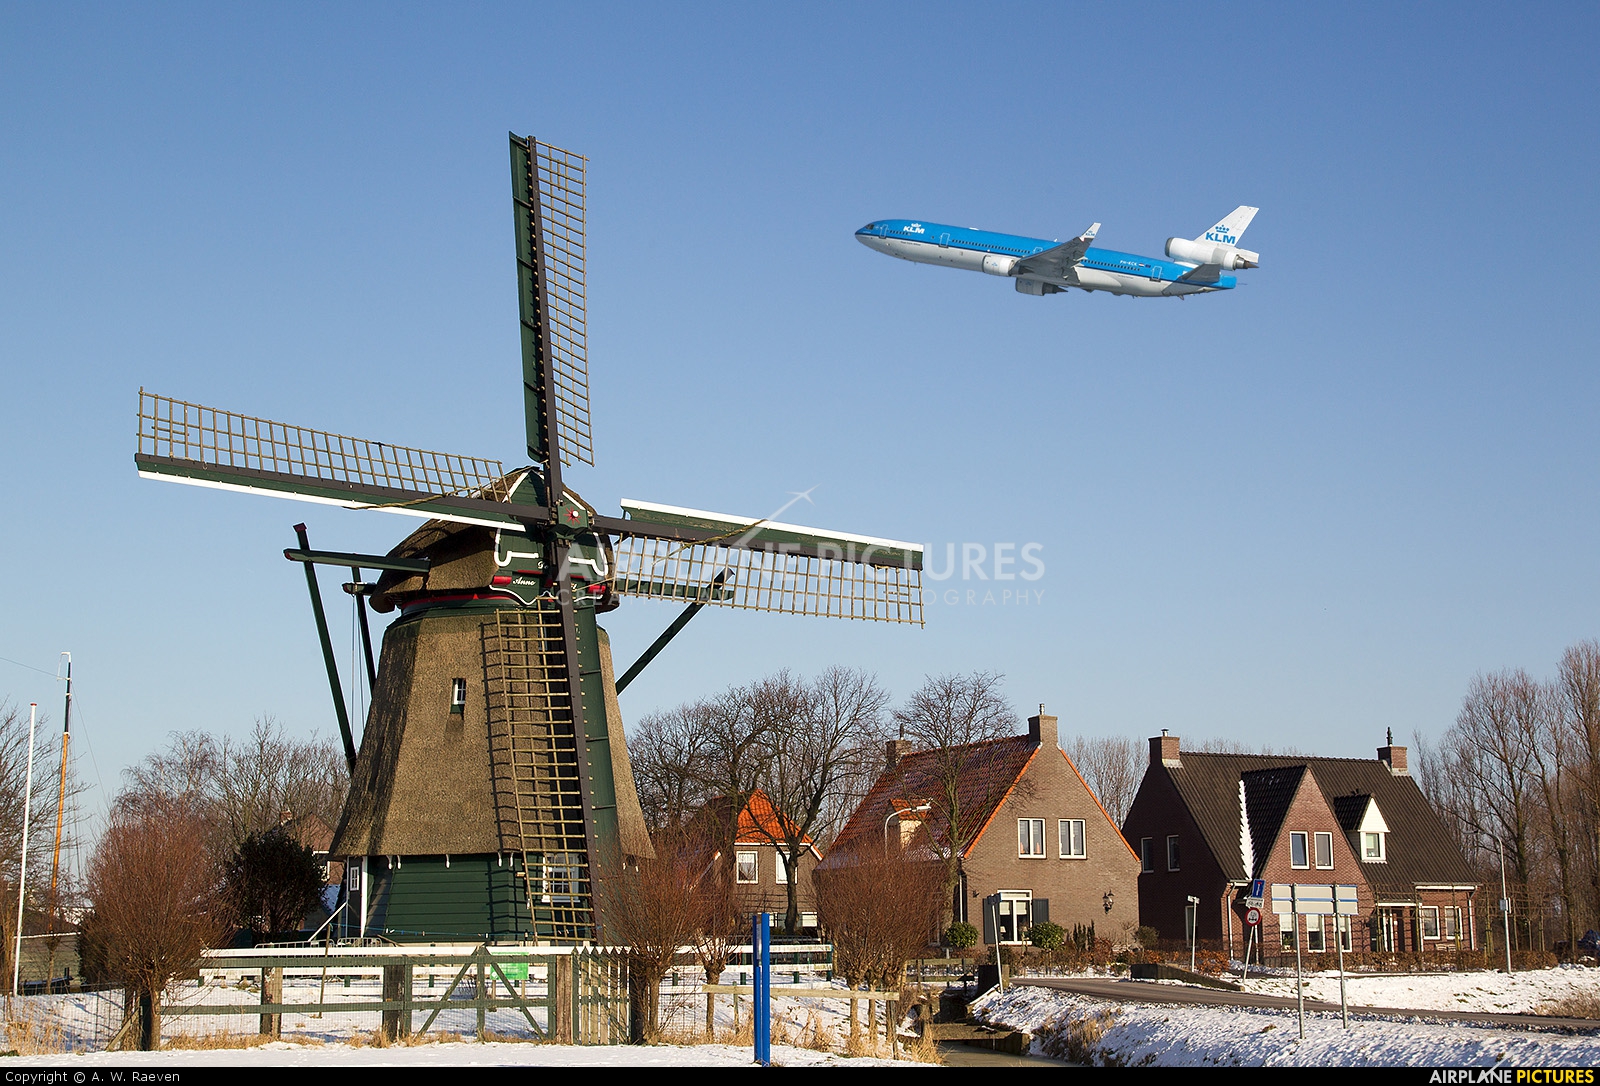 KLM PH-KCK aircraft at Amsterdam - Schiphol